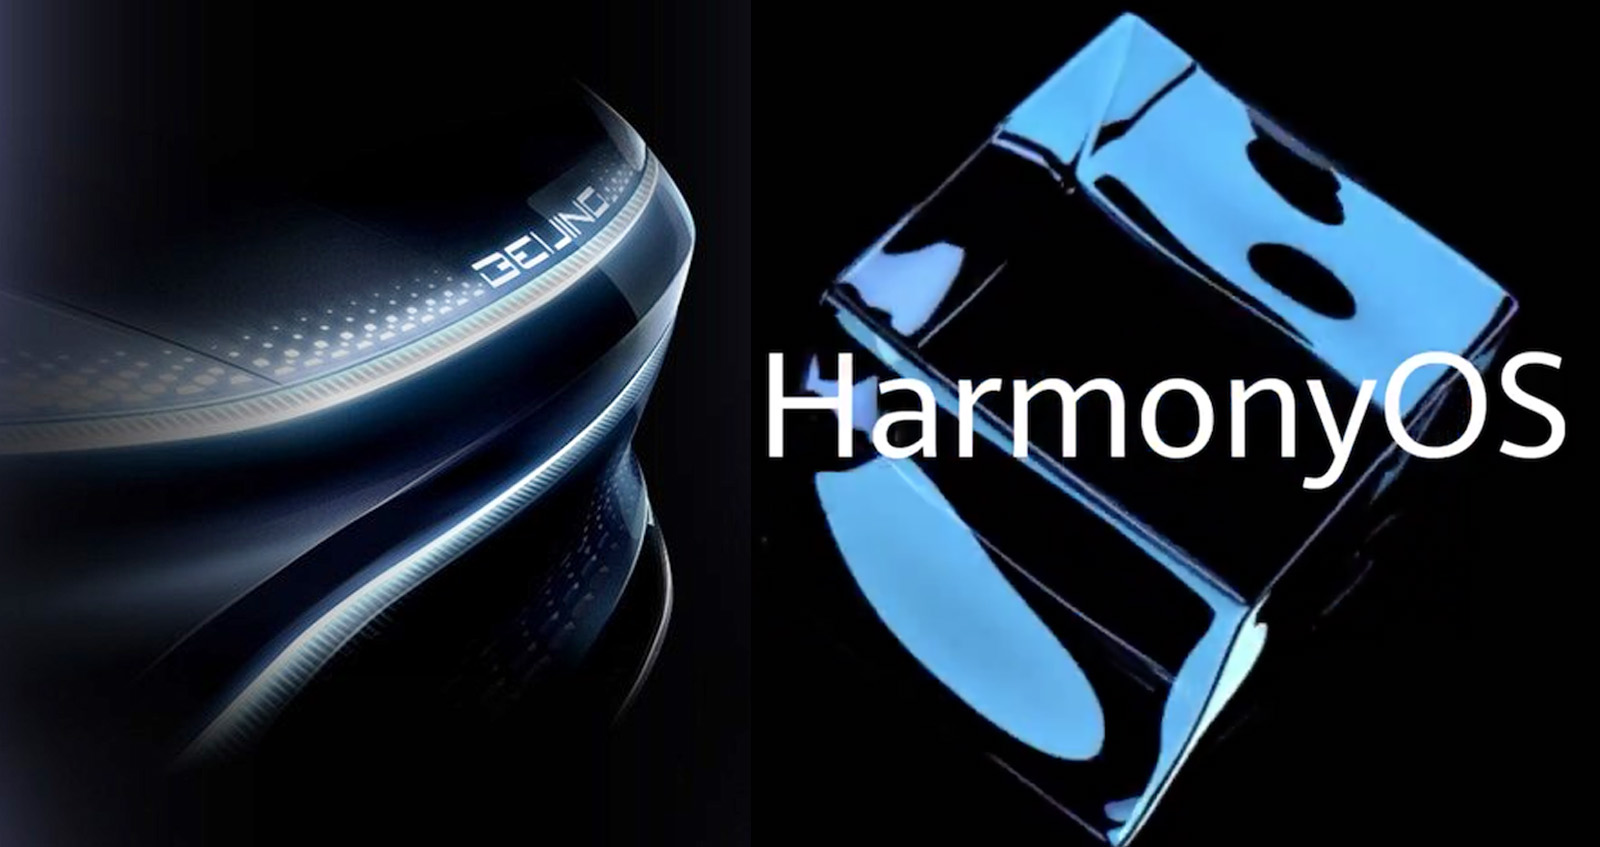 Beijing ปล่อยทีเซอร์ SUV สันดาปพร้อม Harmony OS ของ Huawei